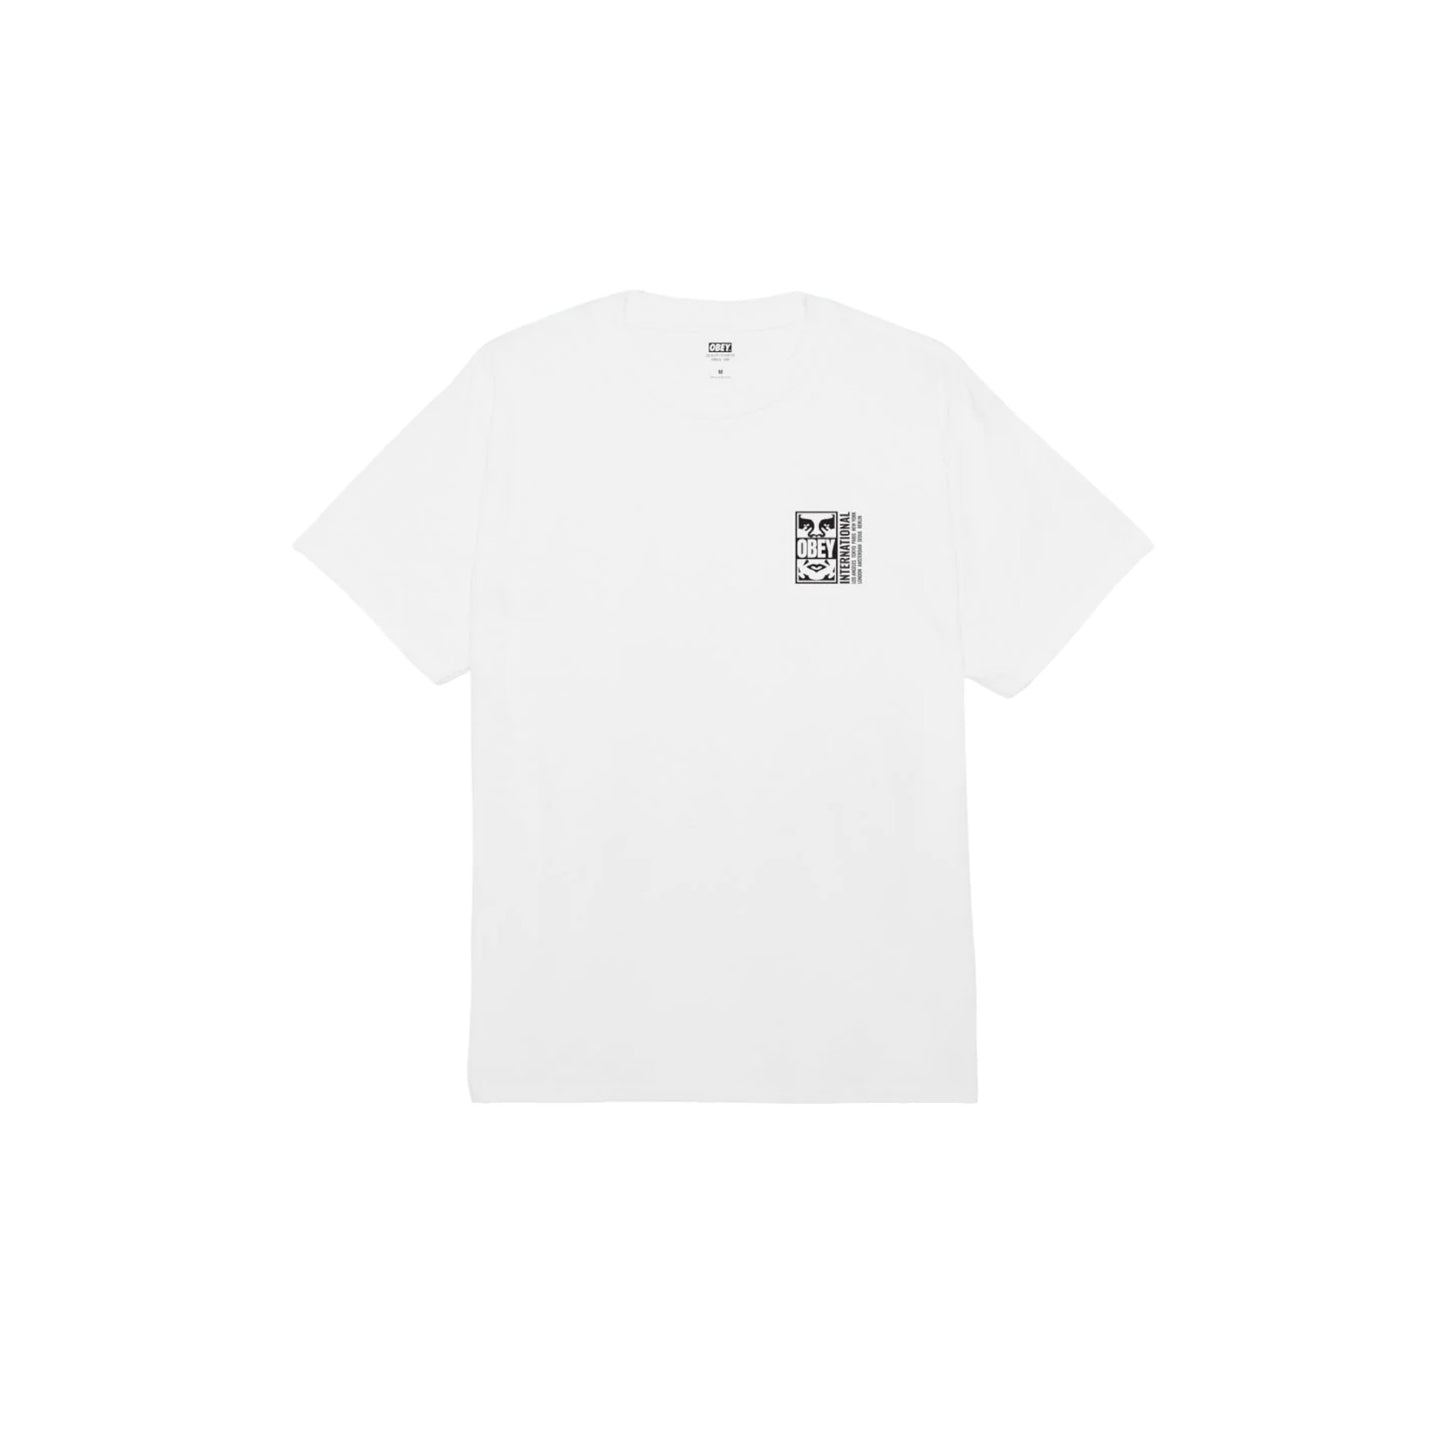 T-shirt Uomo Obey Icon Split Classic Tee - Bianco - Francis Concept